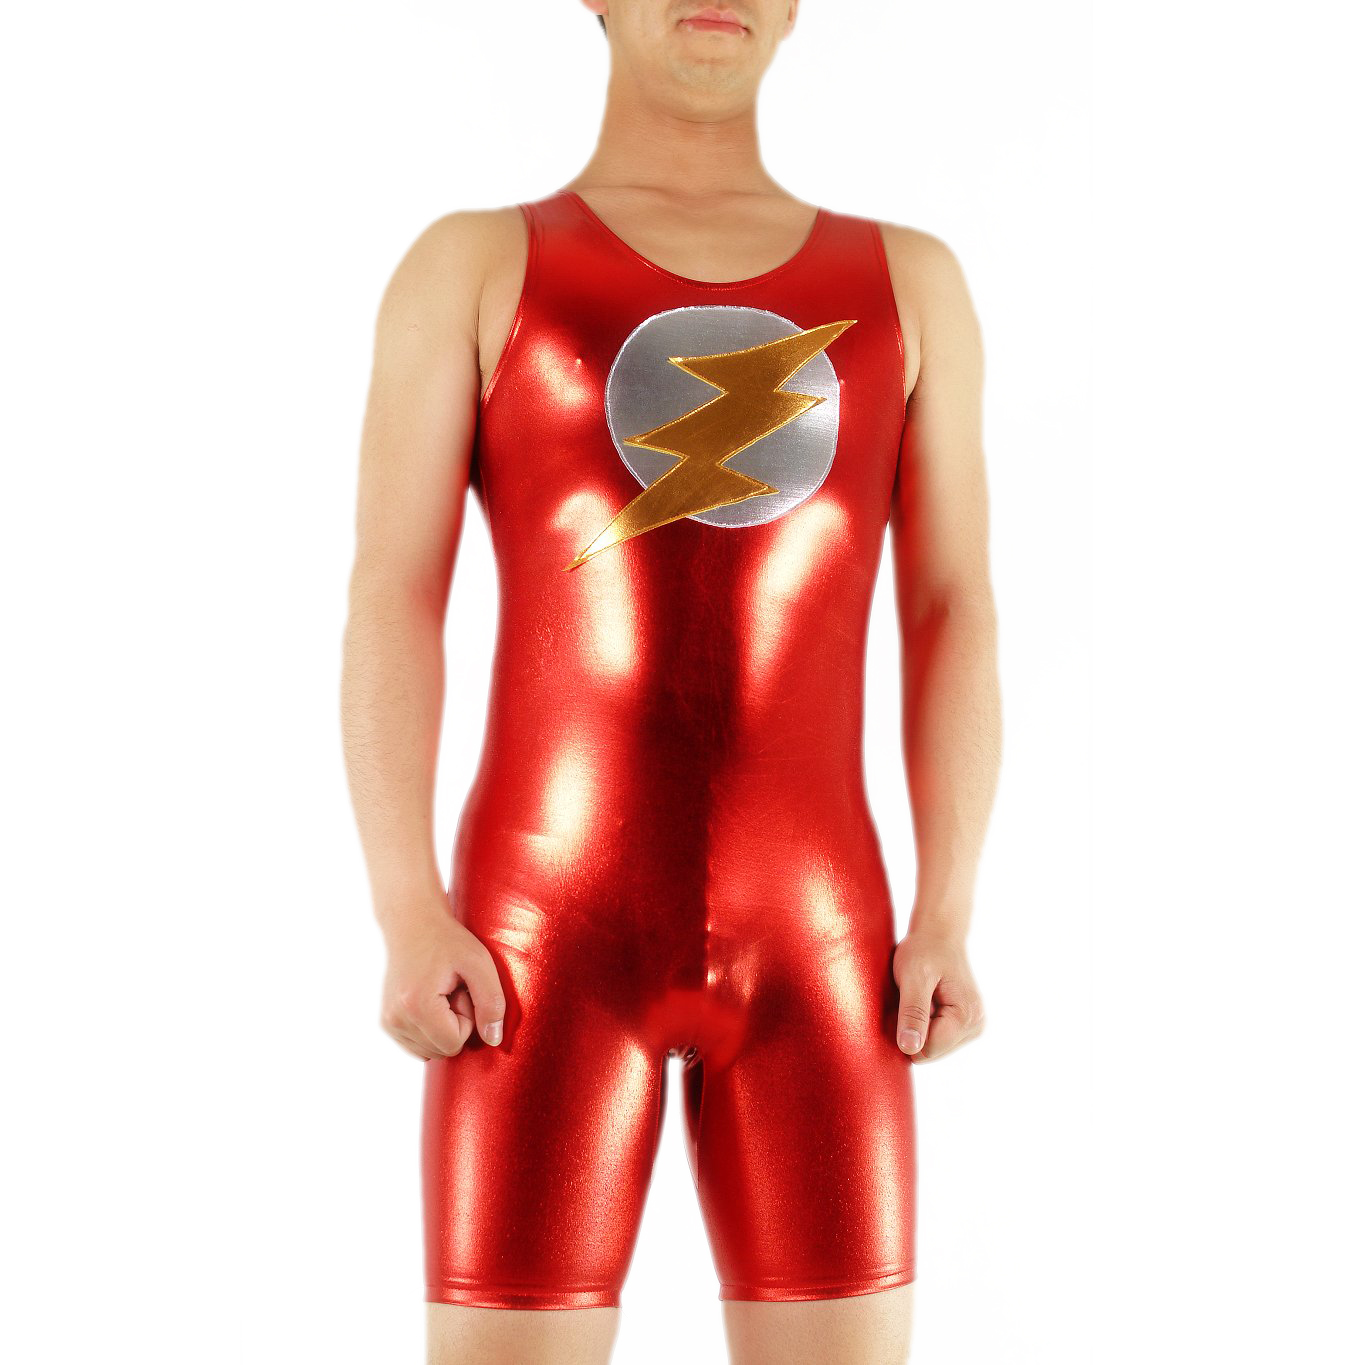 Men's Jumpsuit-styled Red Shiny Metallic Sleeveless Catsuit (M11